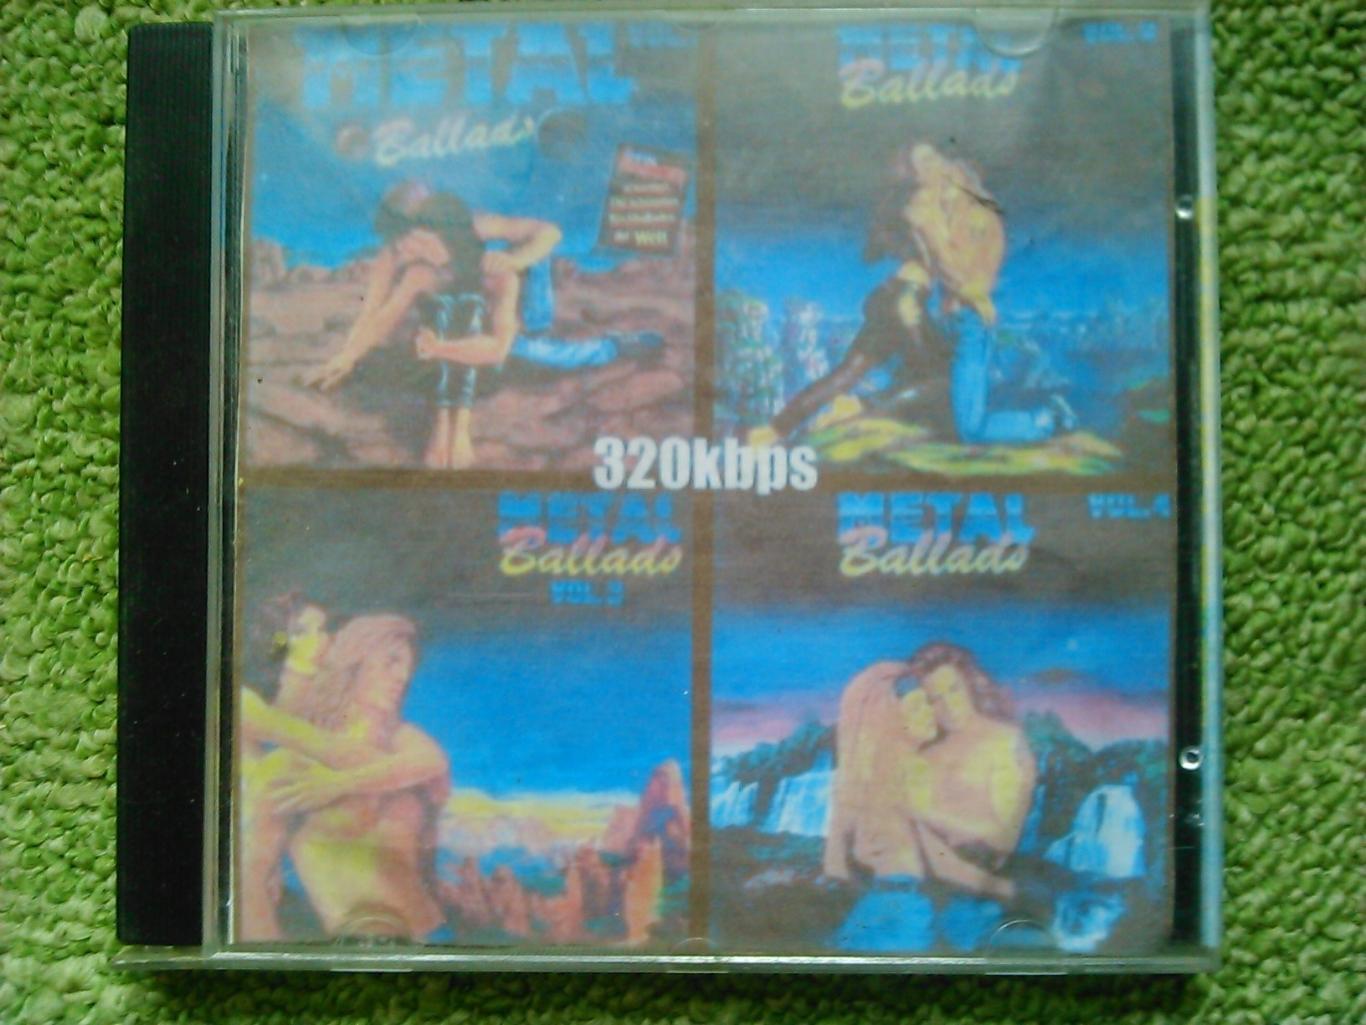 Аудио 2 CD METAL BALLADS vol 1-4 + Lee AARON. Оптом скидки до 46%!